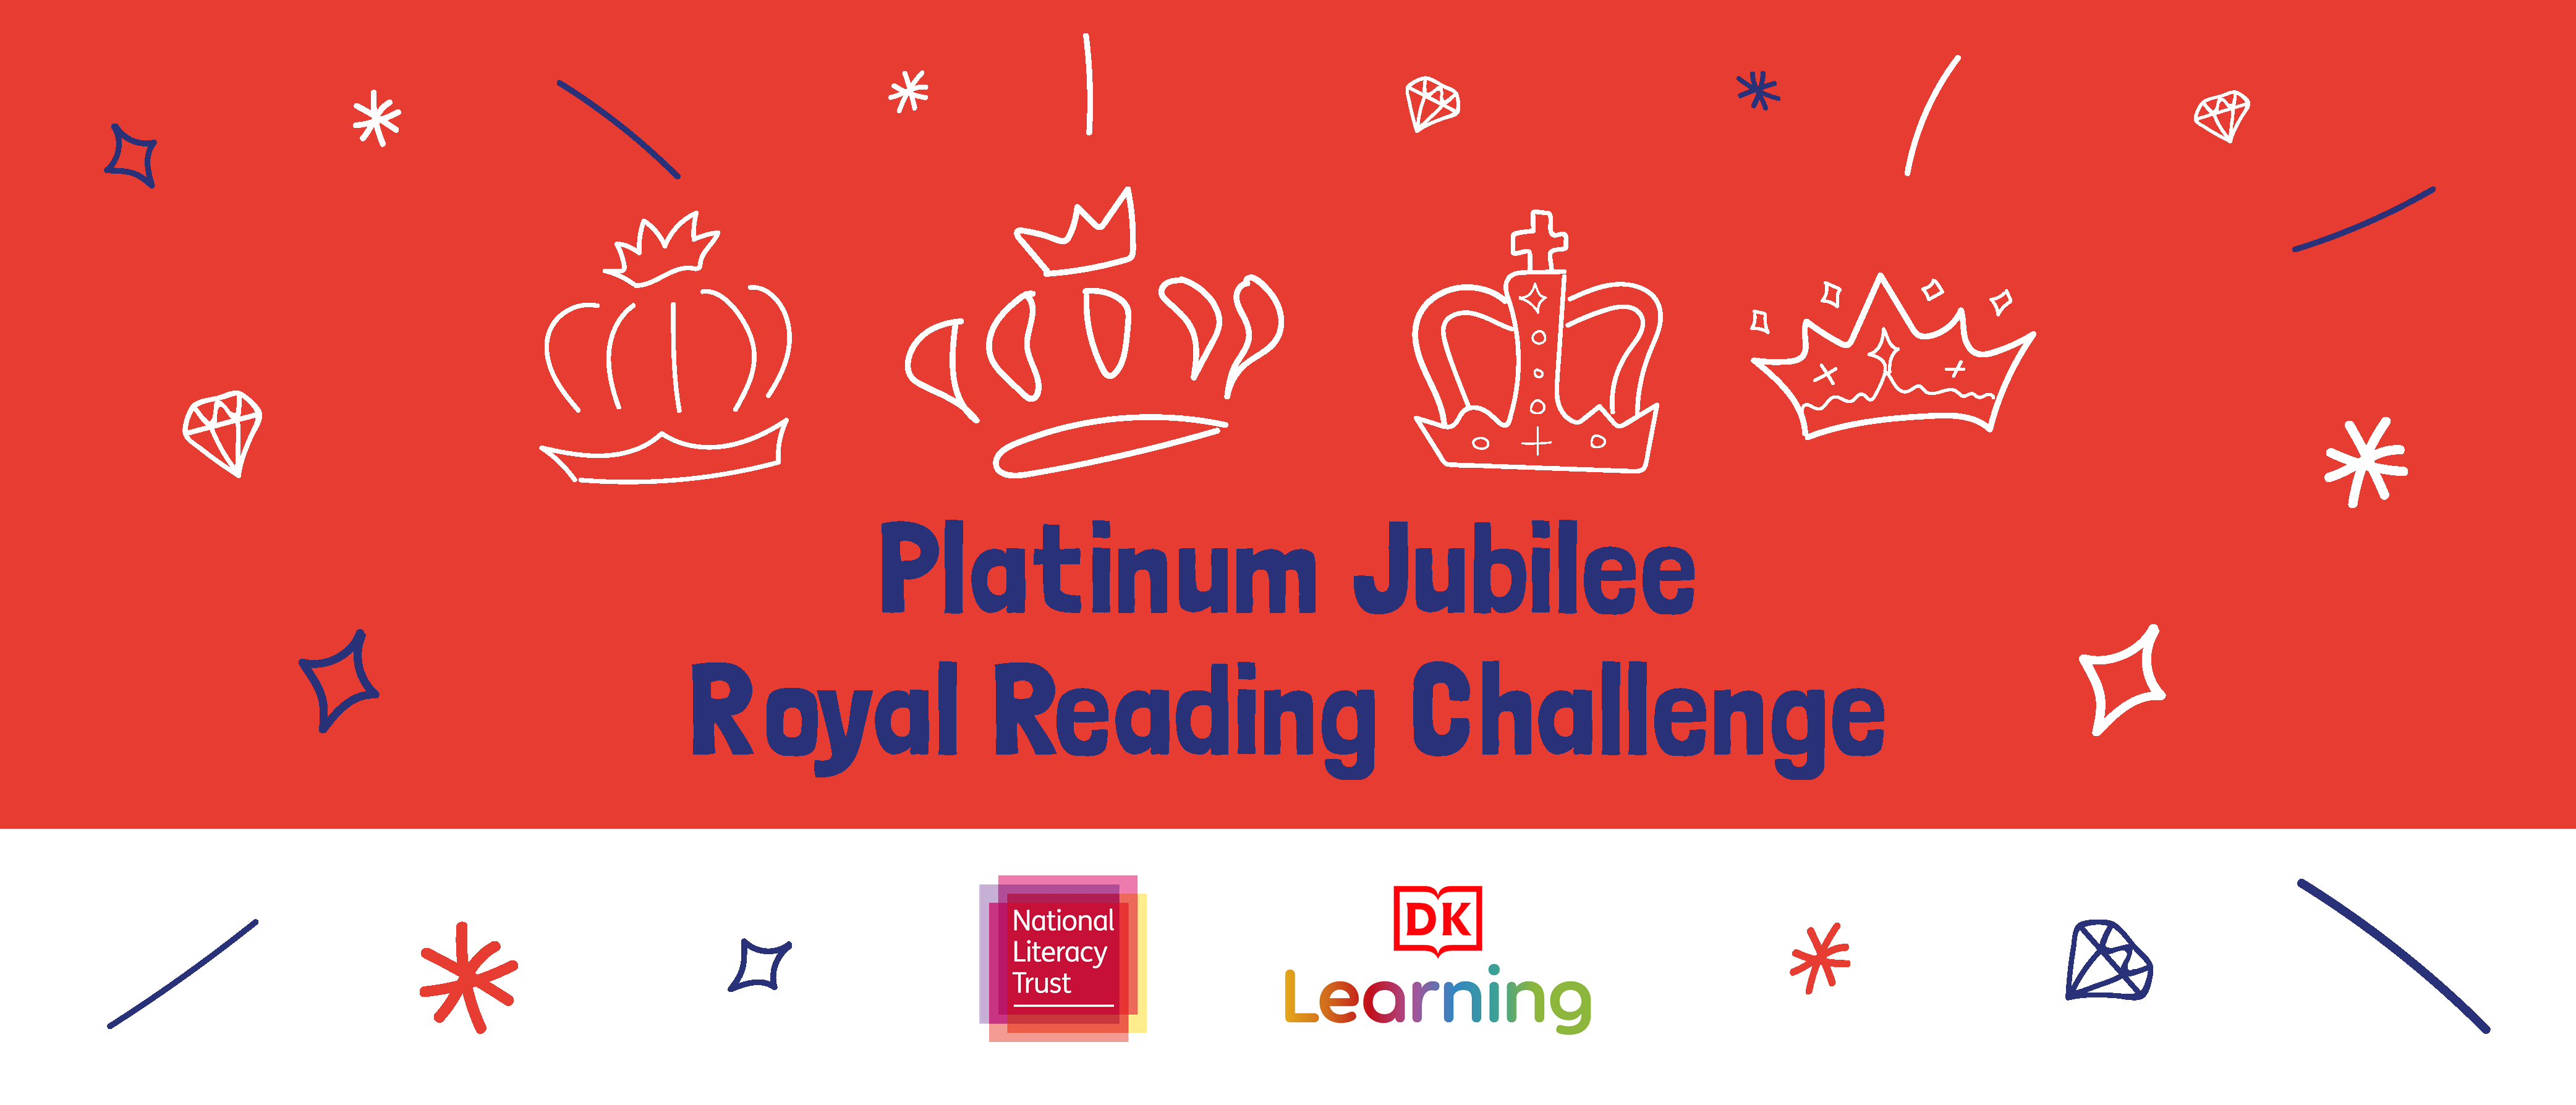 Platinum Jubilee reading challenge banner